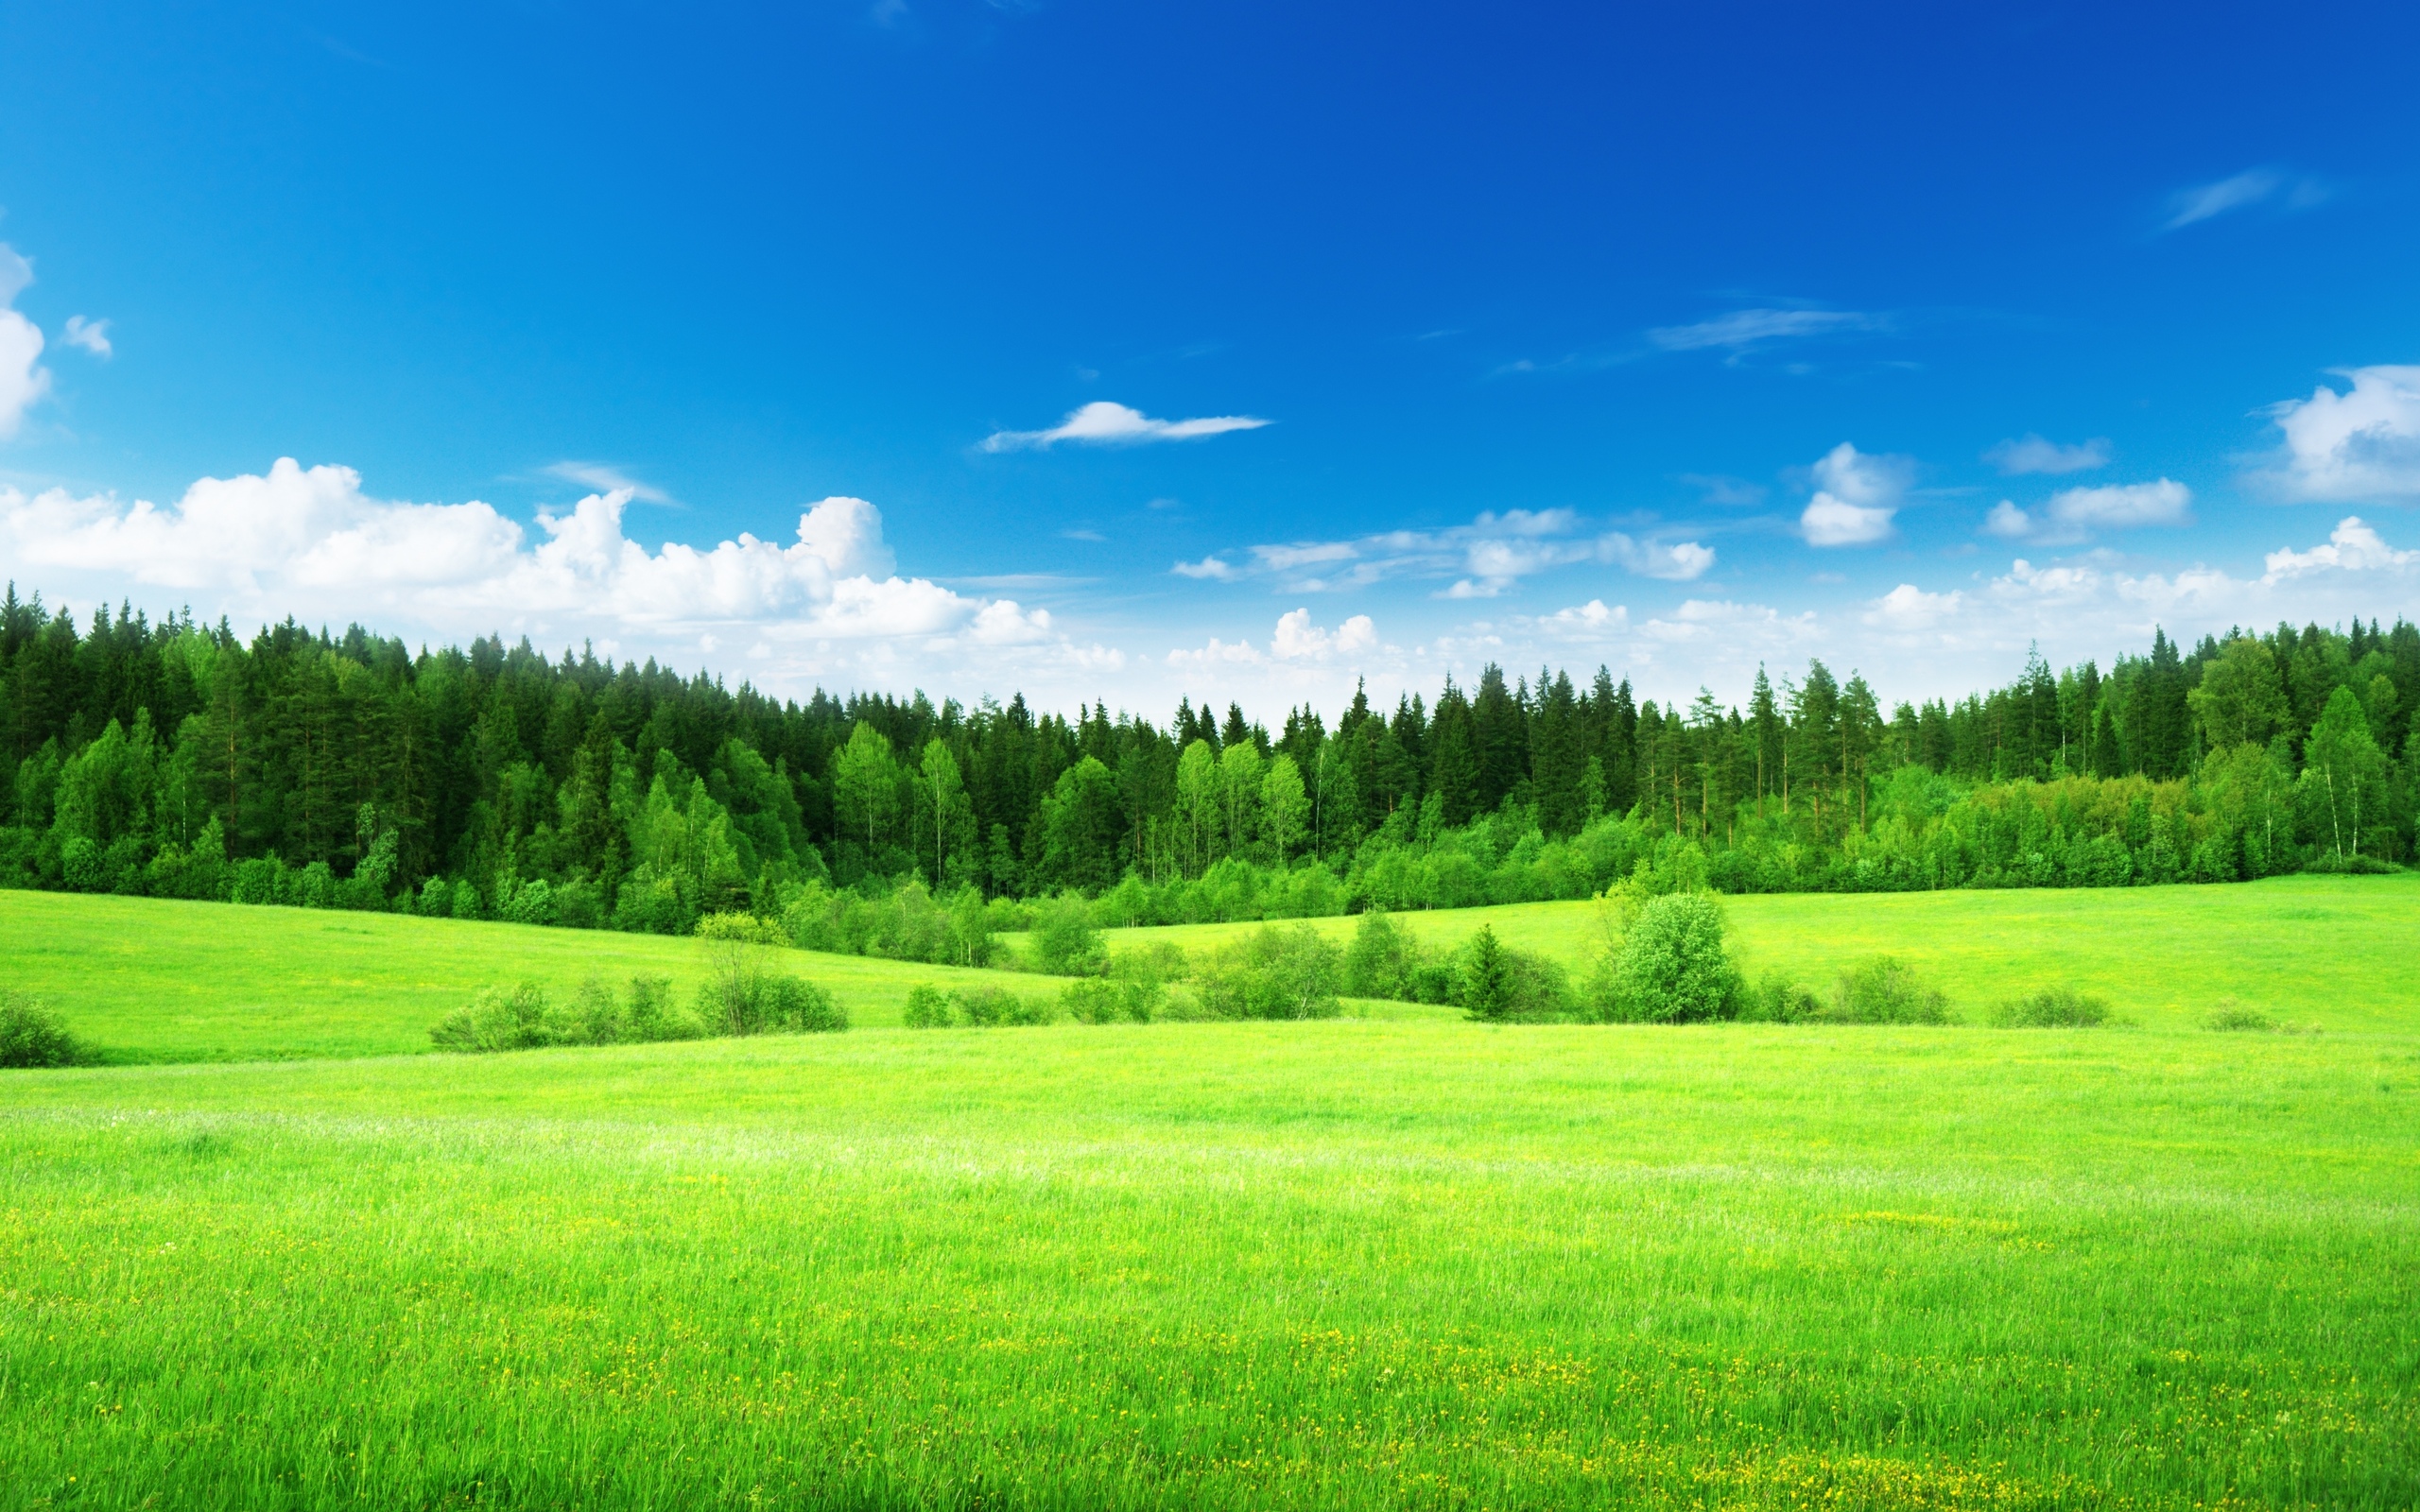 Field Of Grass Background